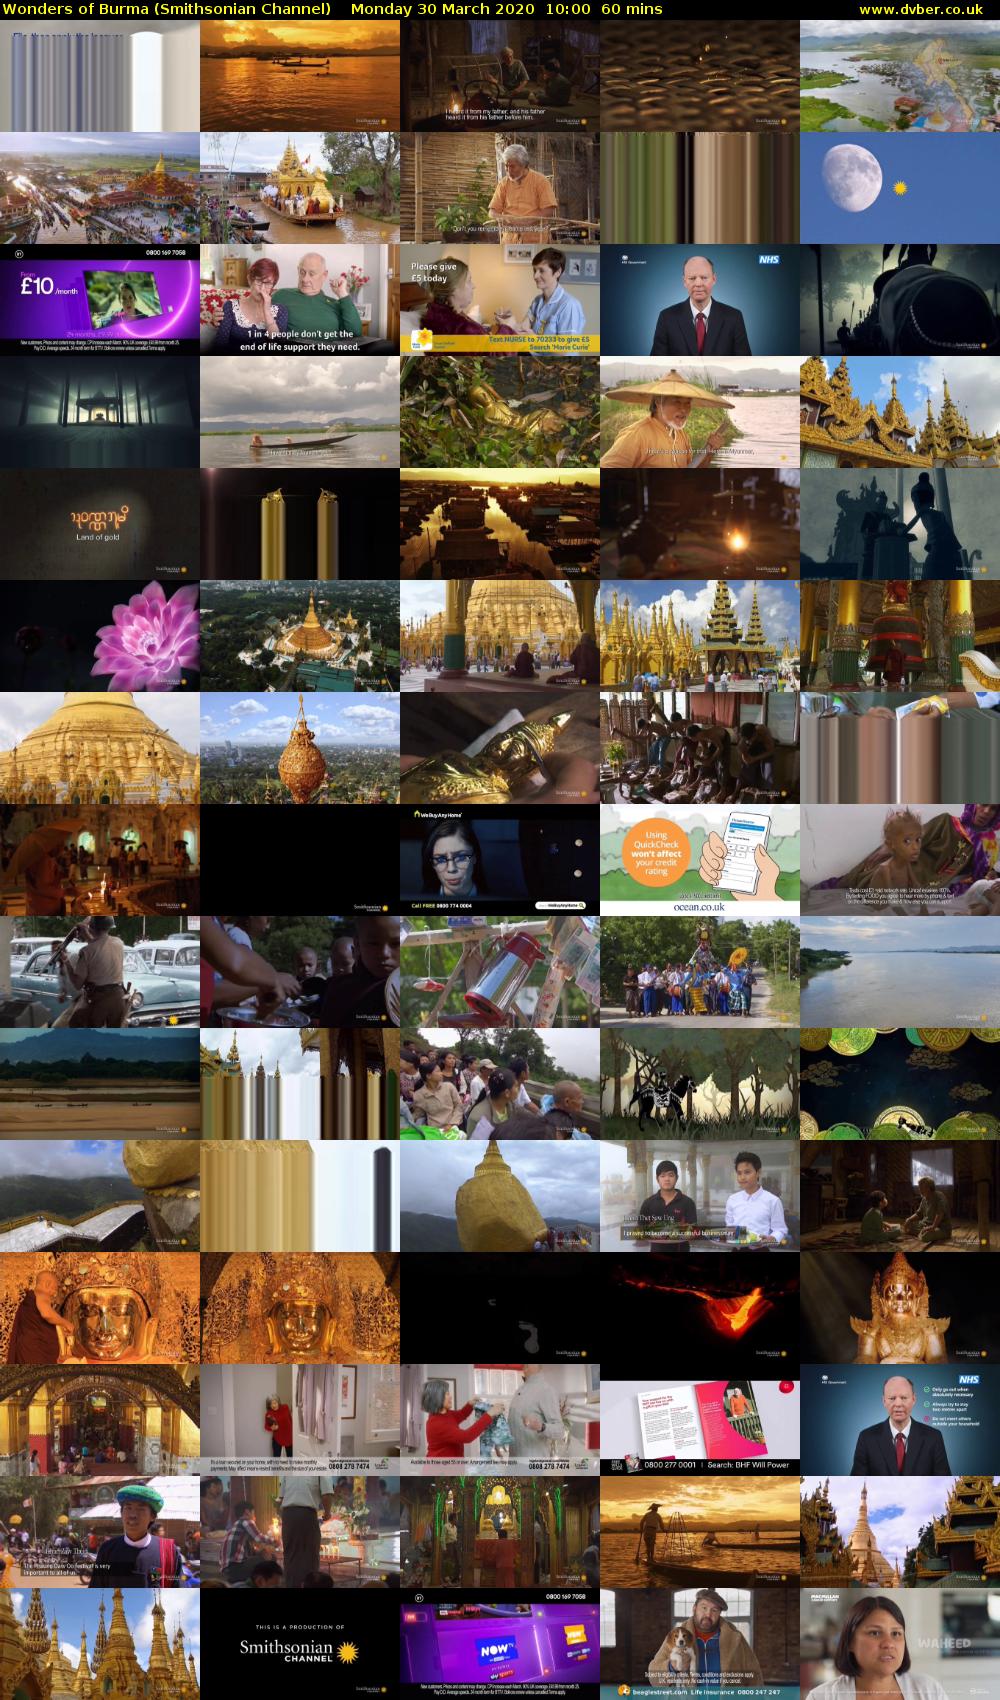 Wonders of Burma (Smithsonian Channel) Monday 30 March 2020 10:00 - 11:00